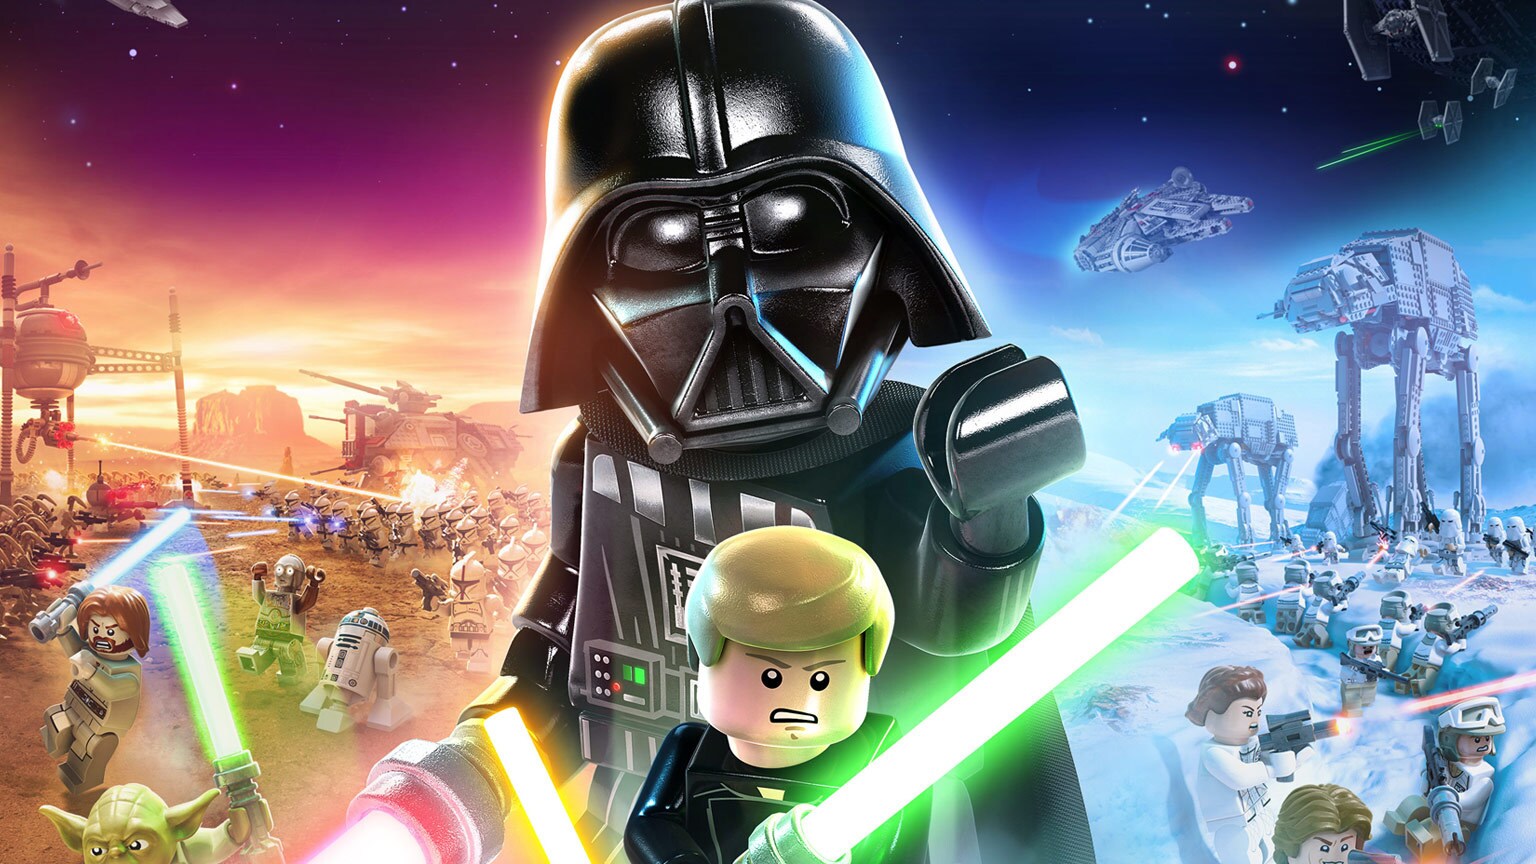 News - Lego Star Wars - The Skywalker Saga